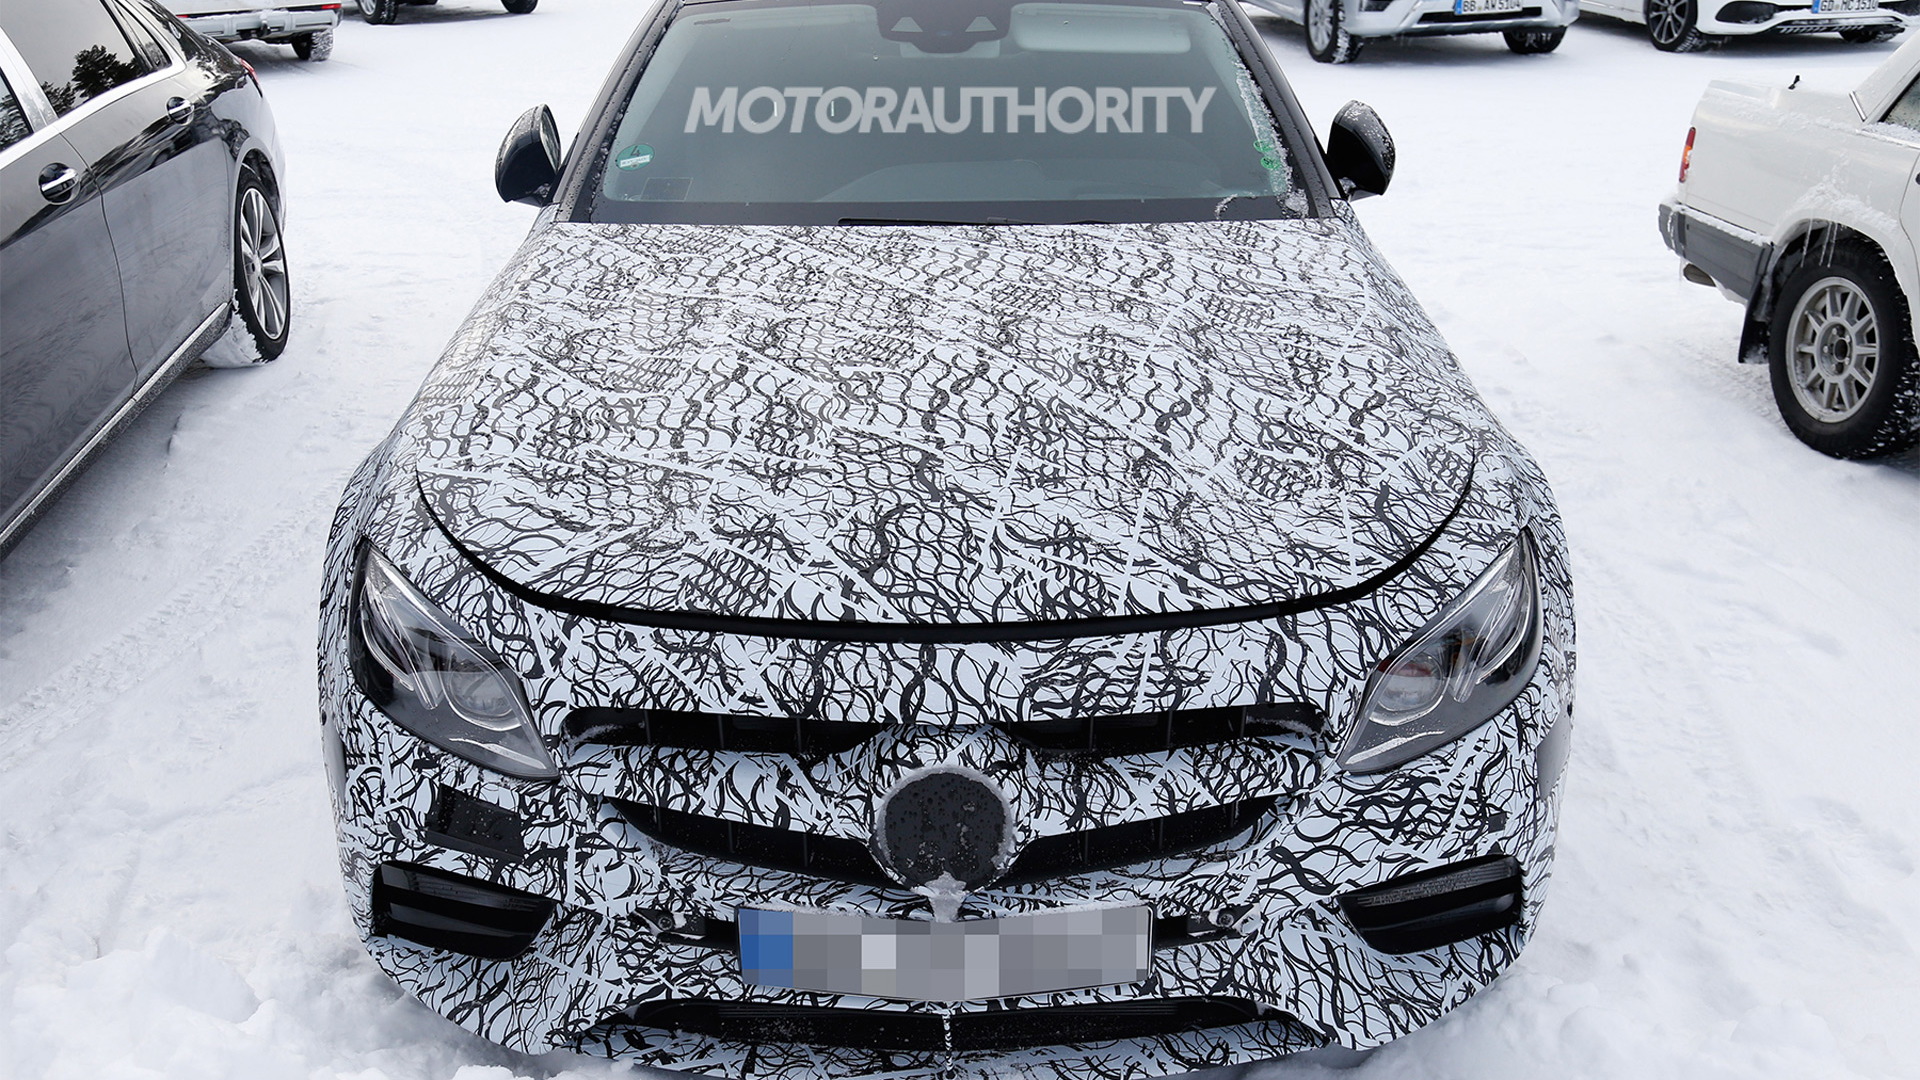 2017 Mercedes-AMG E63 spy shots - Image via S. Baldauf/SB-Medien